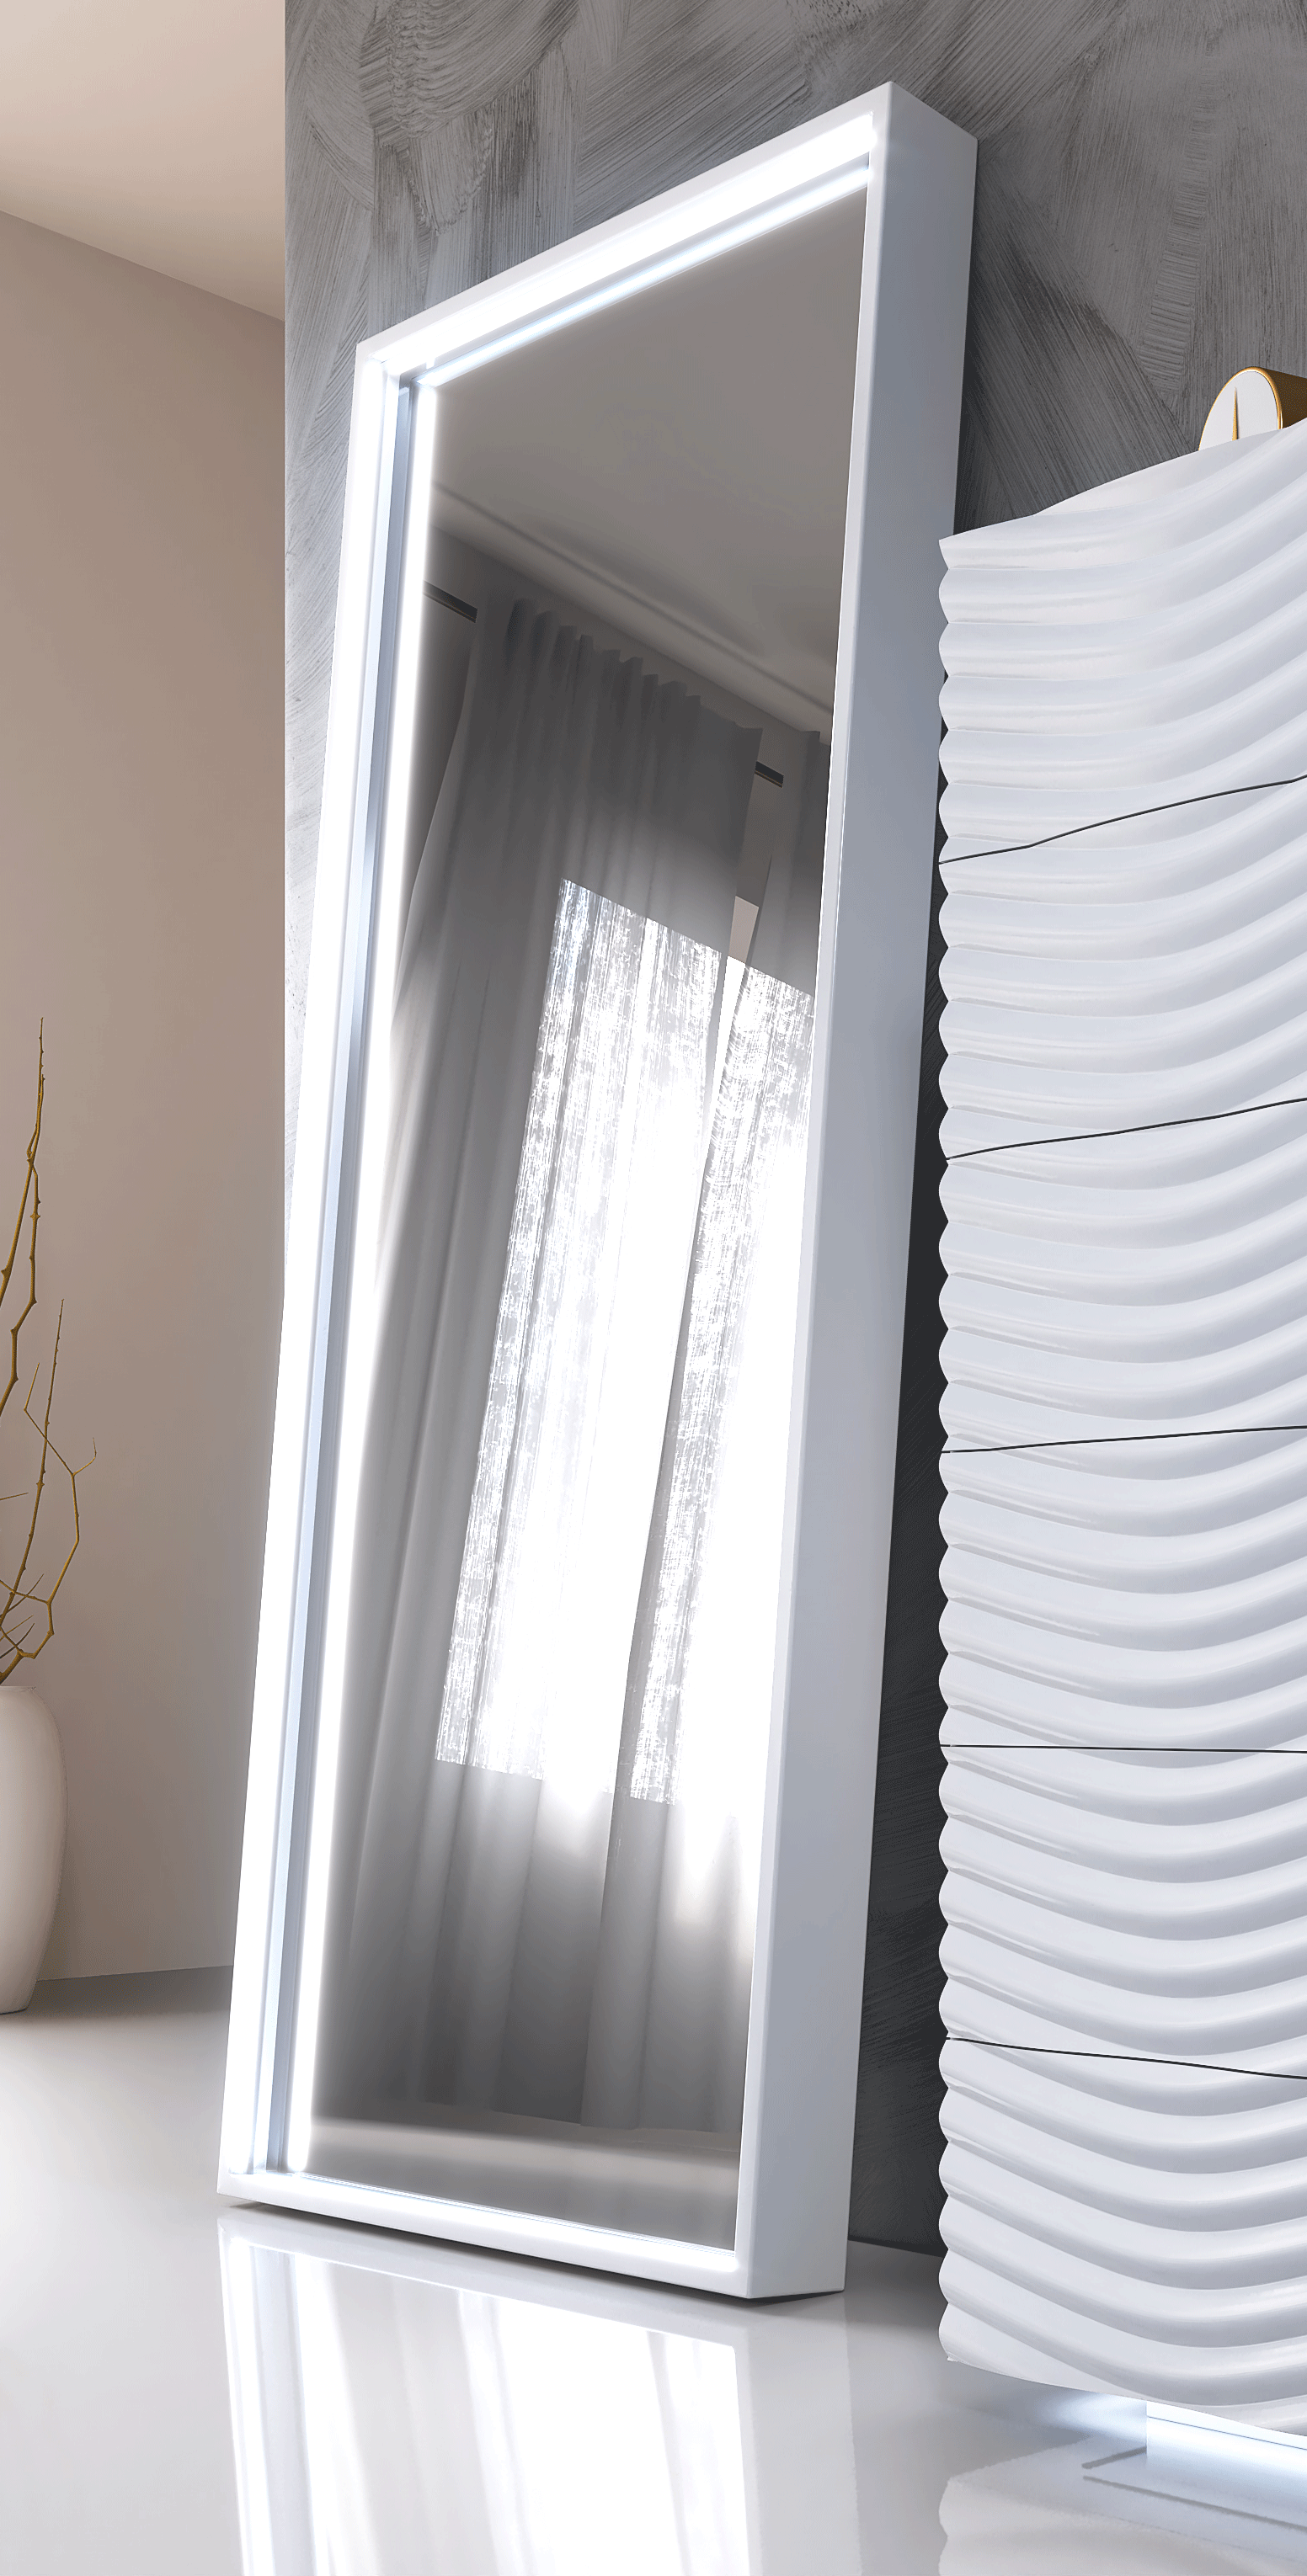 Brands Gamamobel Bedroom Sets, Spain Wave WHITE mirror for double dresser